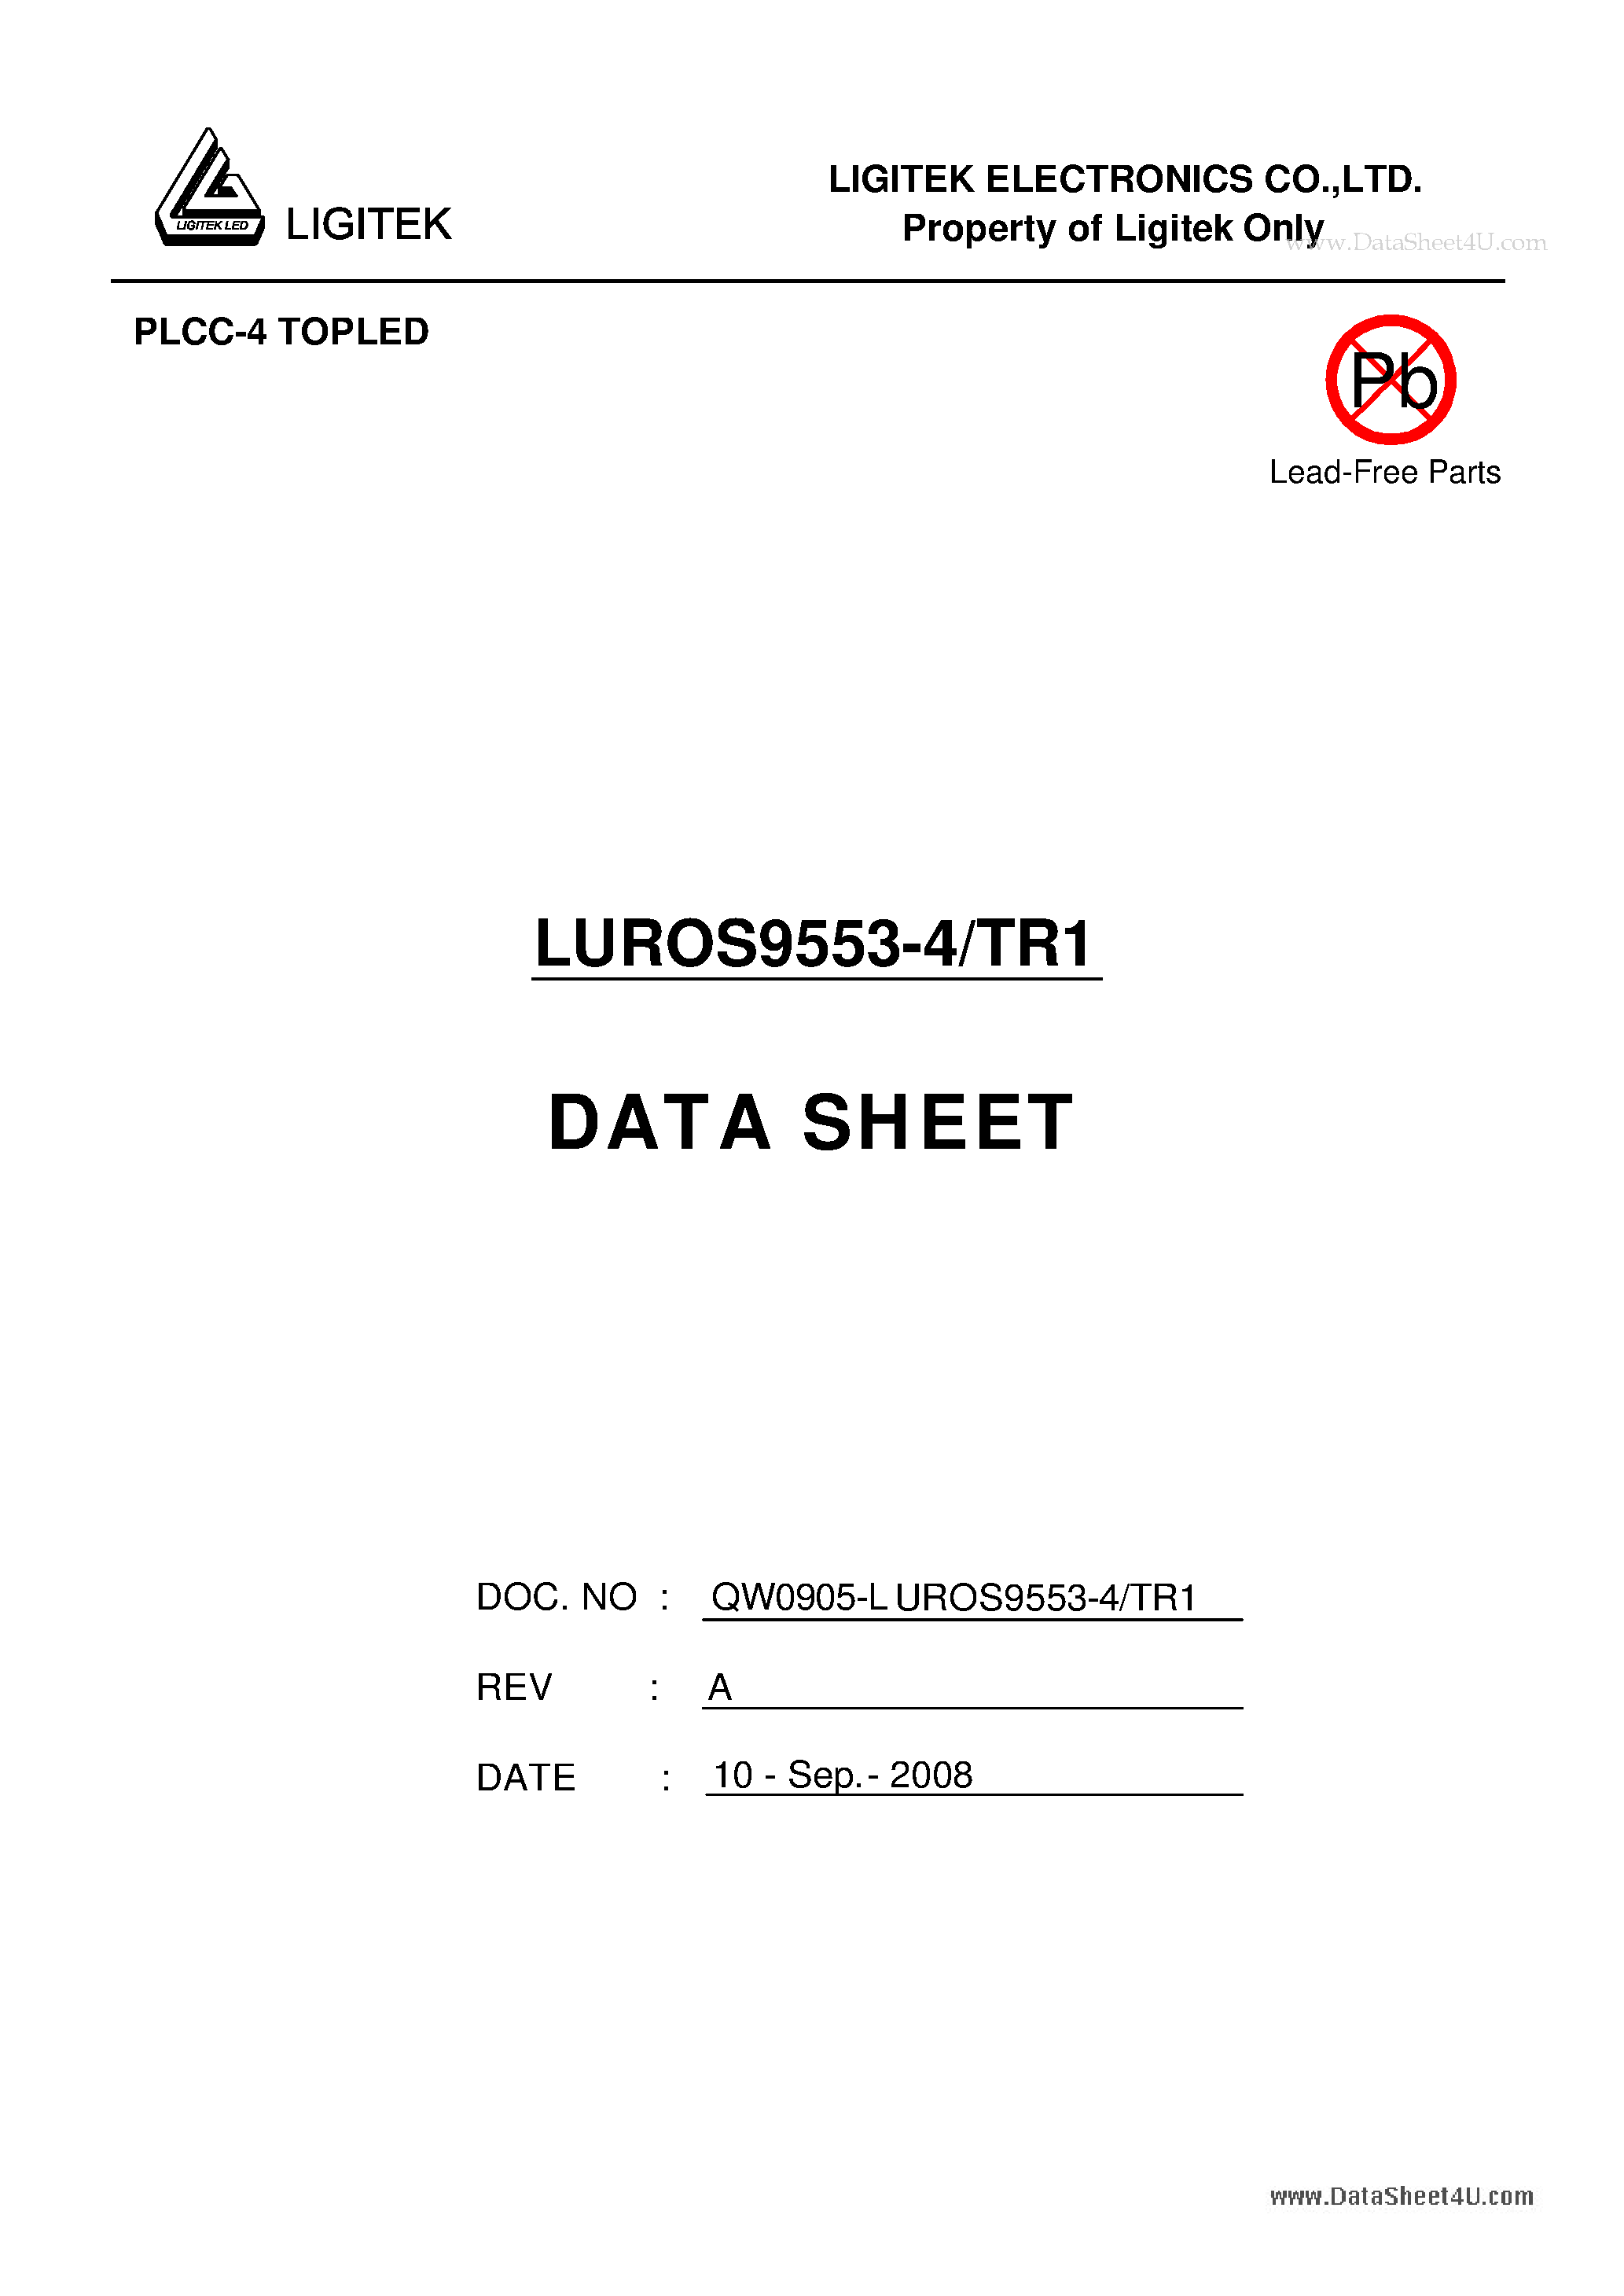 Даташит LUROS9553-4-TR1-PLCC-4 TOPLED страница 1